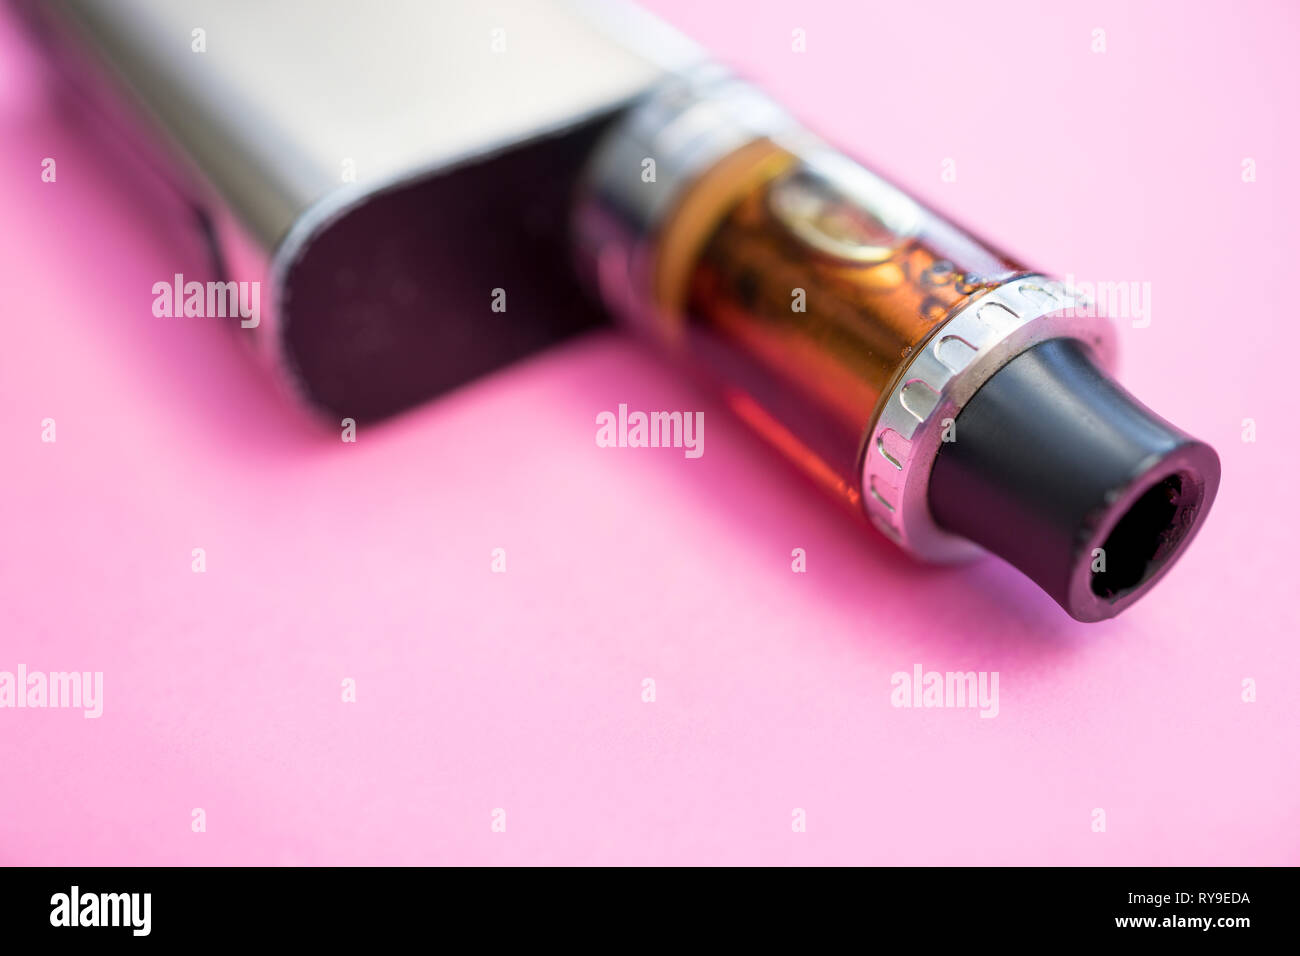 Vape metallo pen sigaretta elettronica vaping sfondo rosa Foto Stock